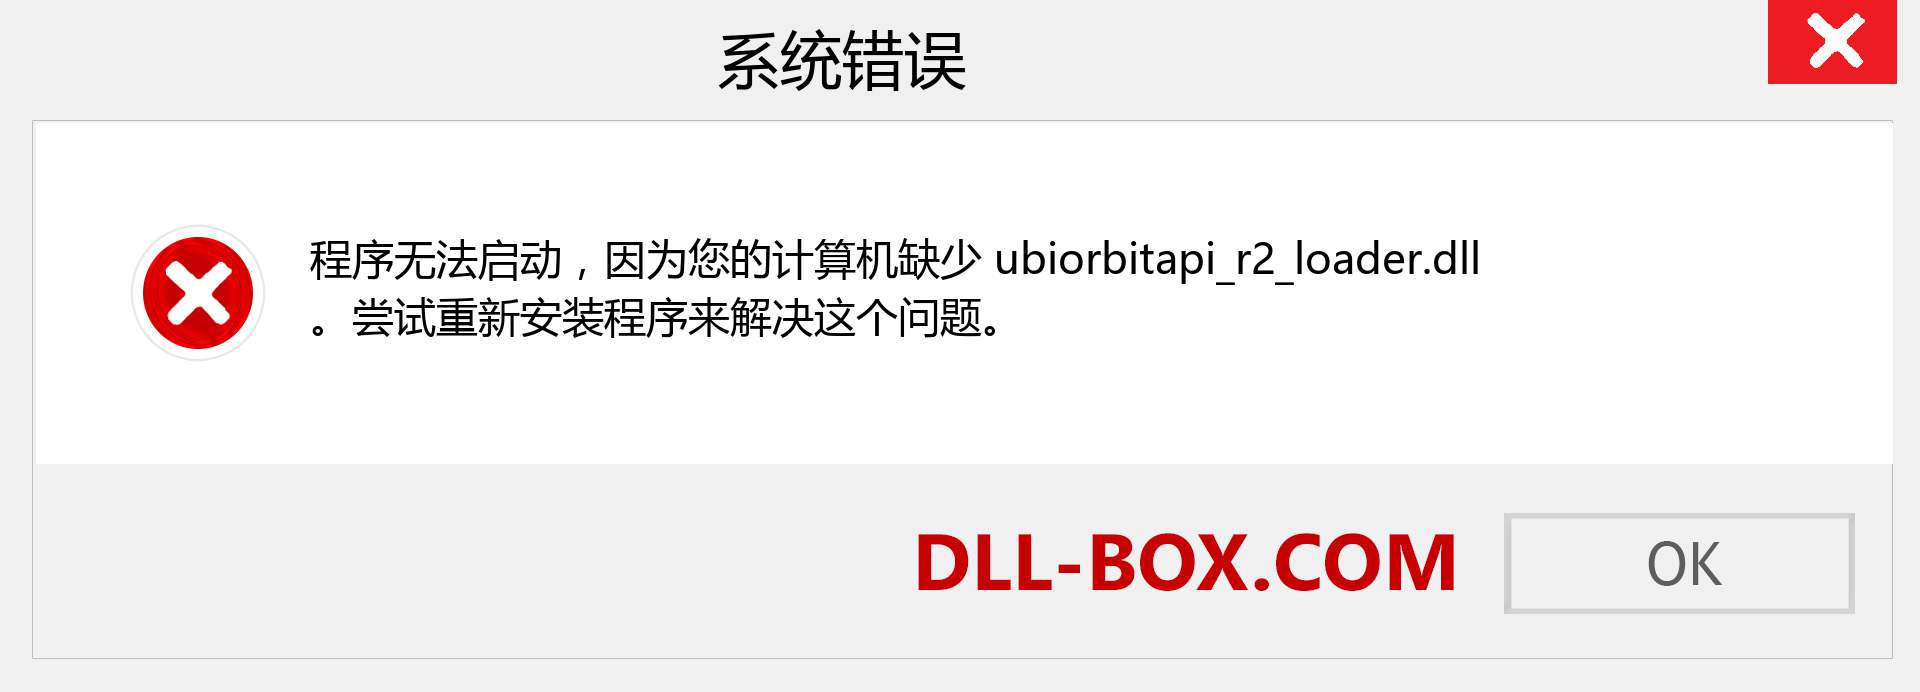 ubiorbitapi_r2_loader.dll 文件丢失？。 适用于 Windows 7、8、10 的下载 - 修复 Windows、照片、图像上的 ubiorbitapi_r2_loader dll 丢失错误